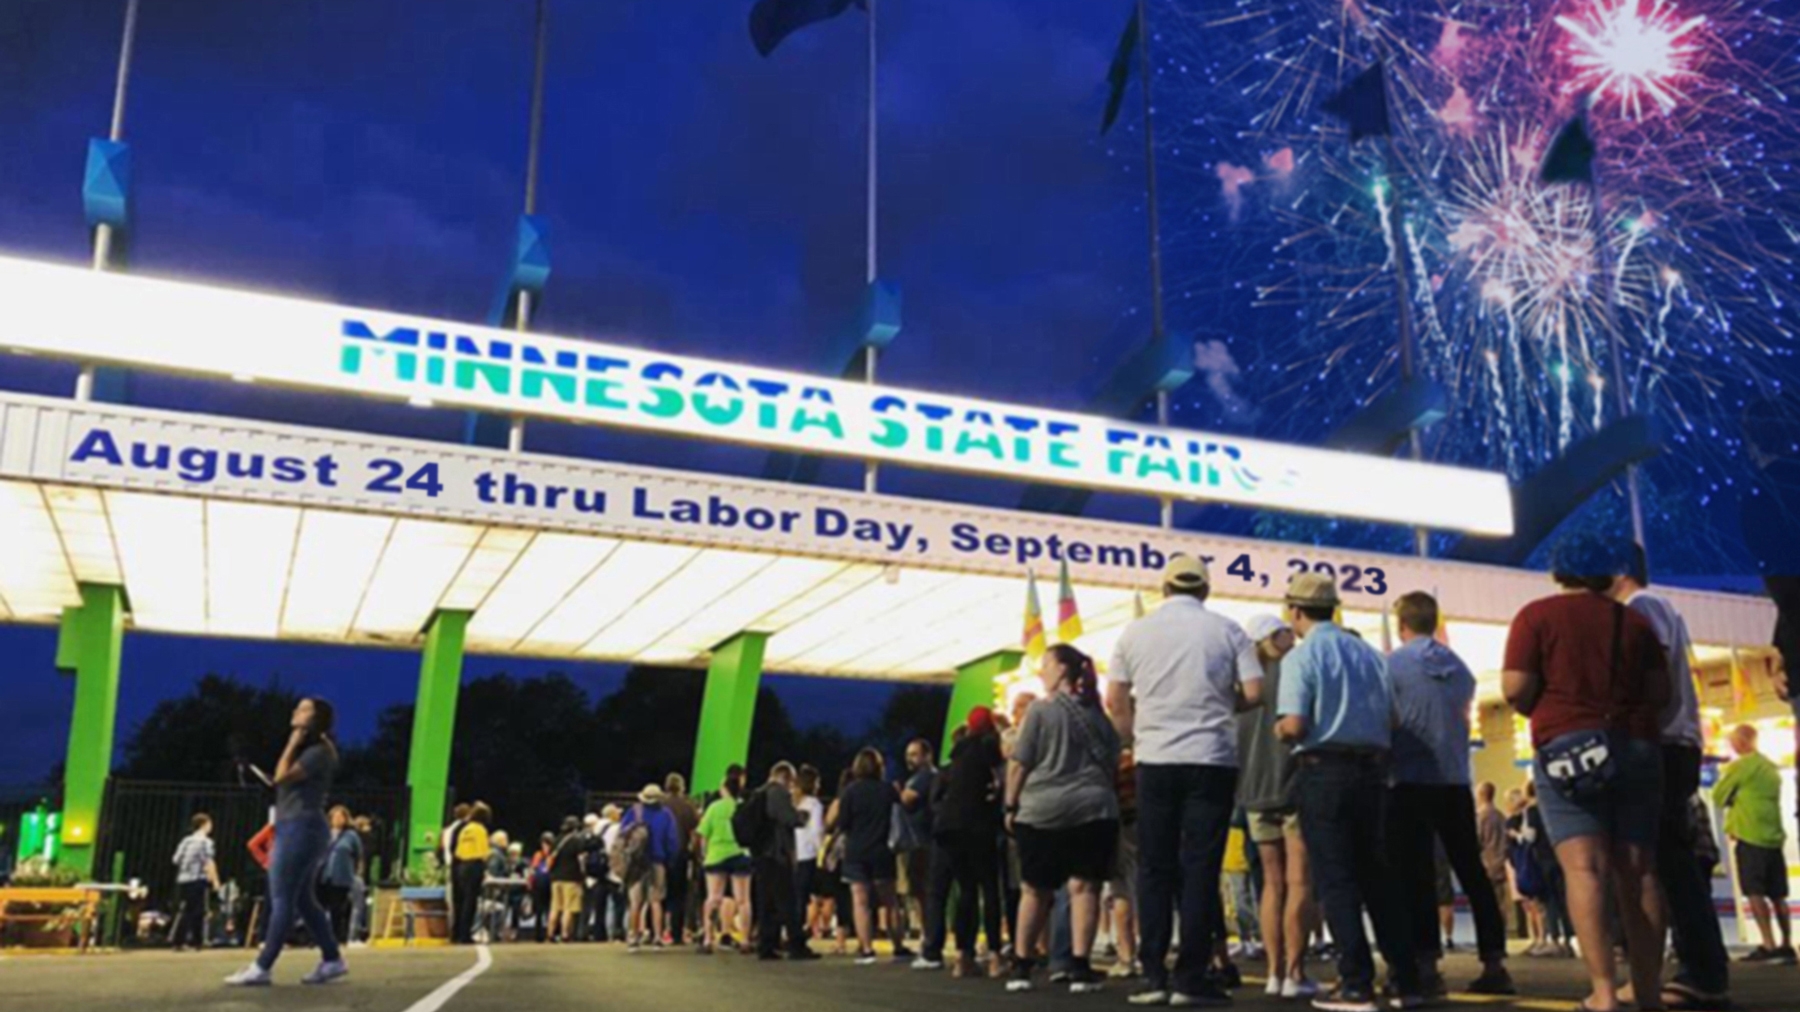 Minnesota State Fair names new CEO